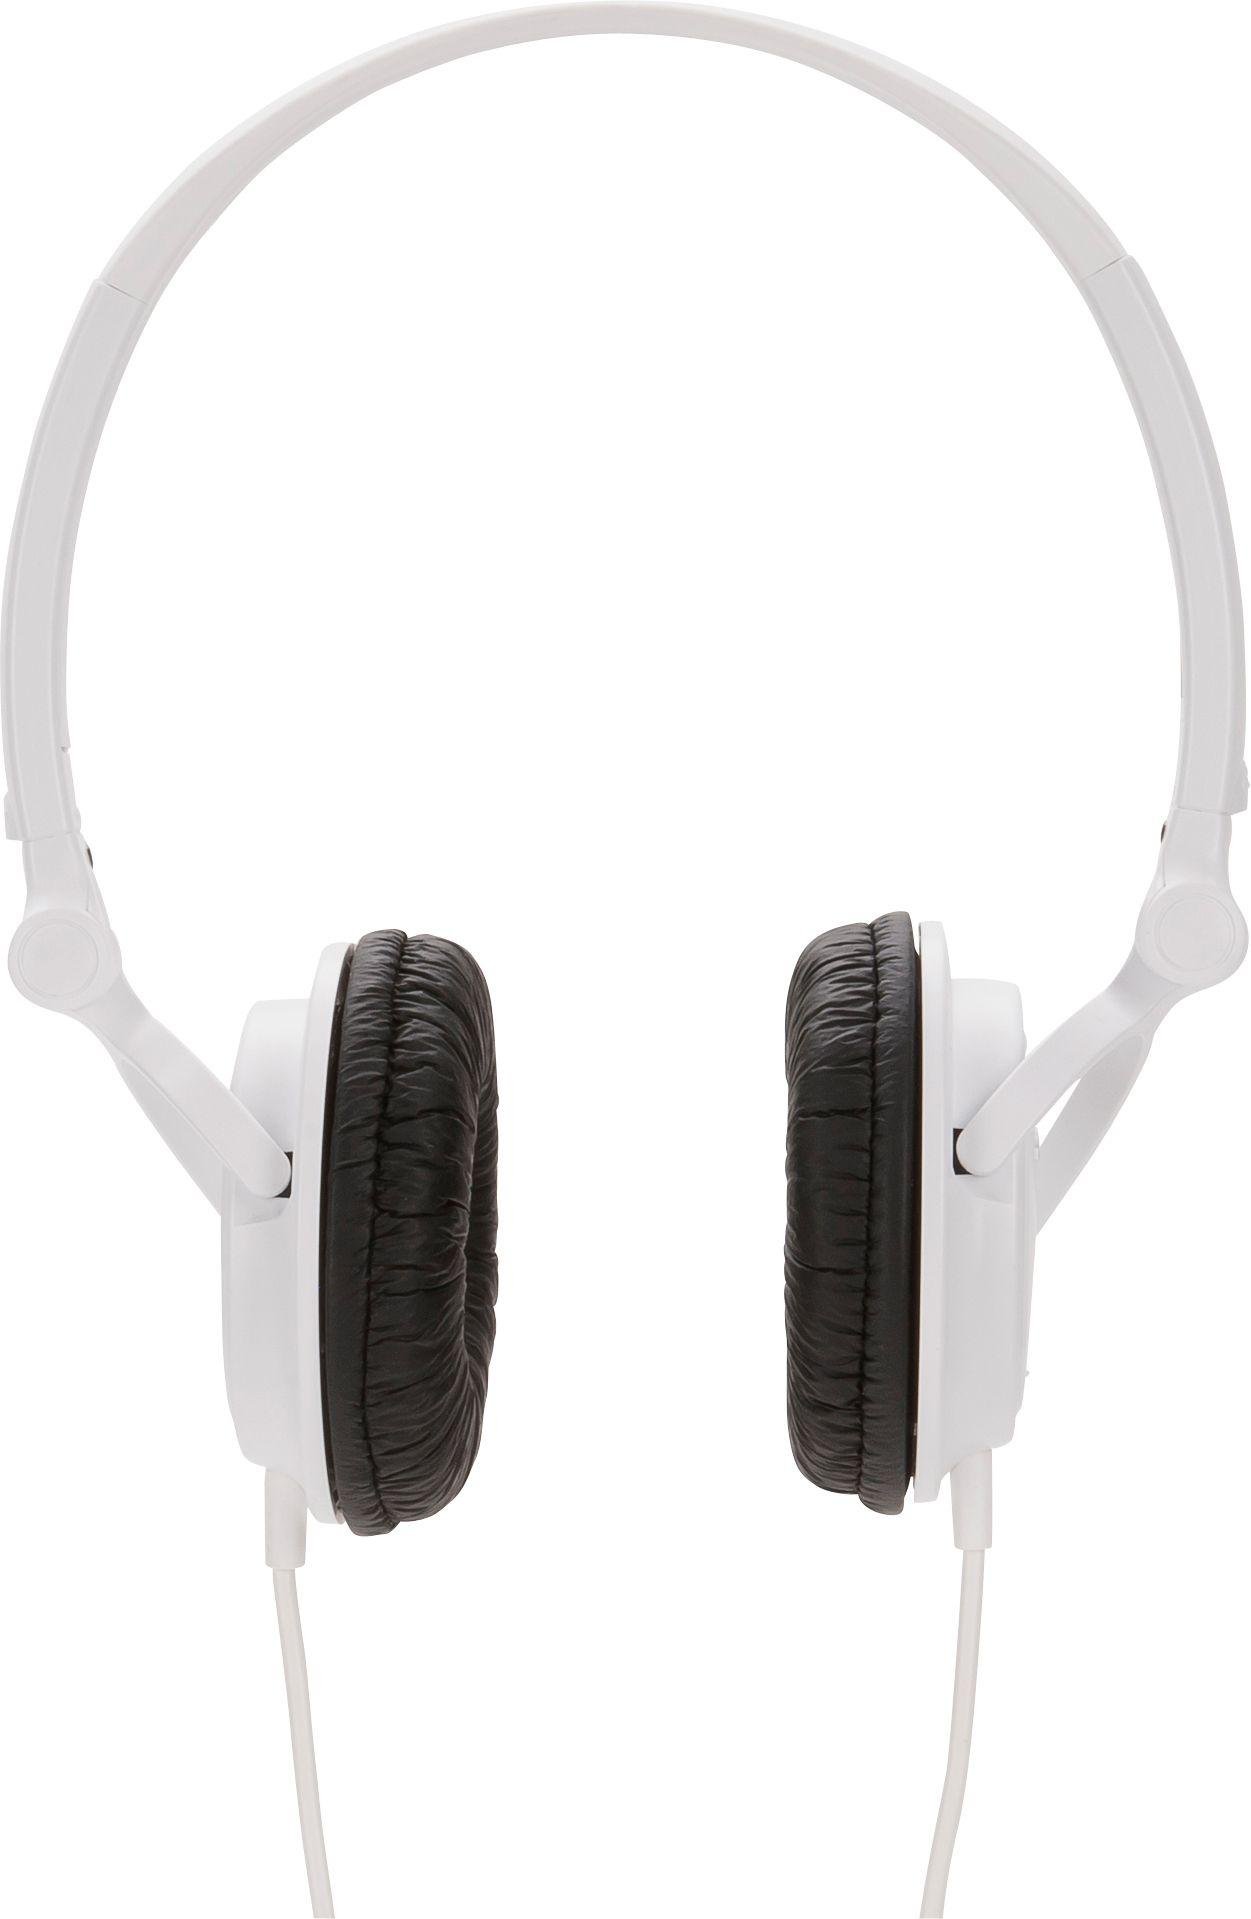 Sony MDRV150 DJ Headphones Review